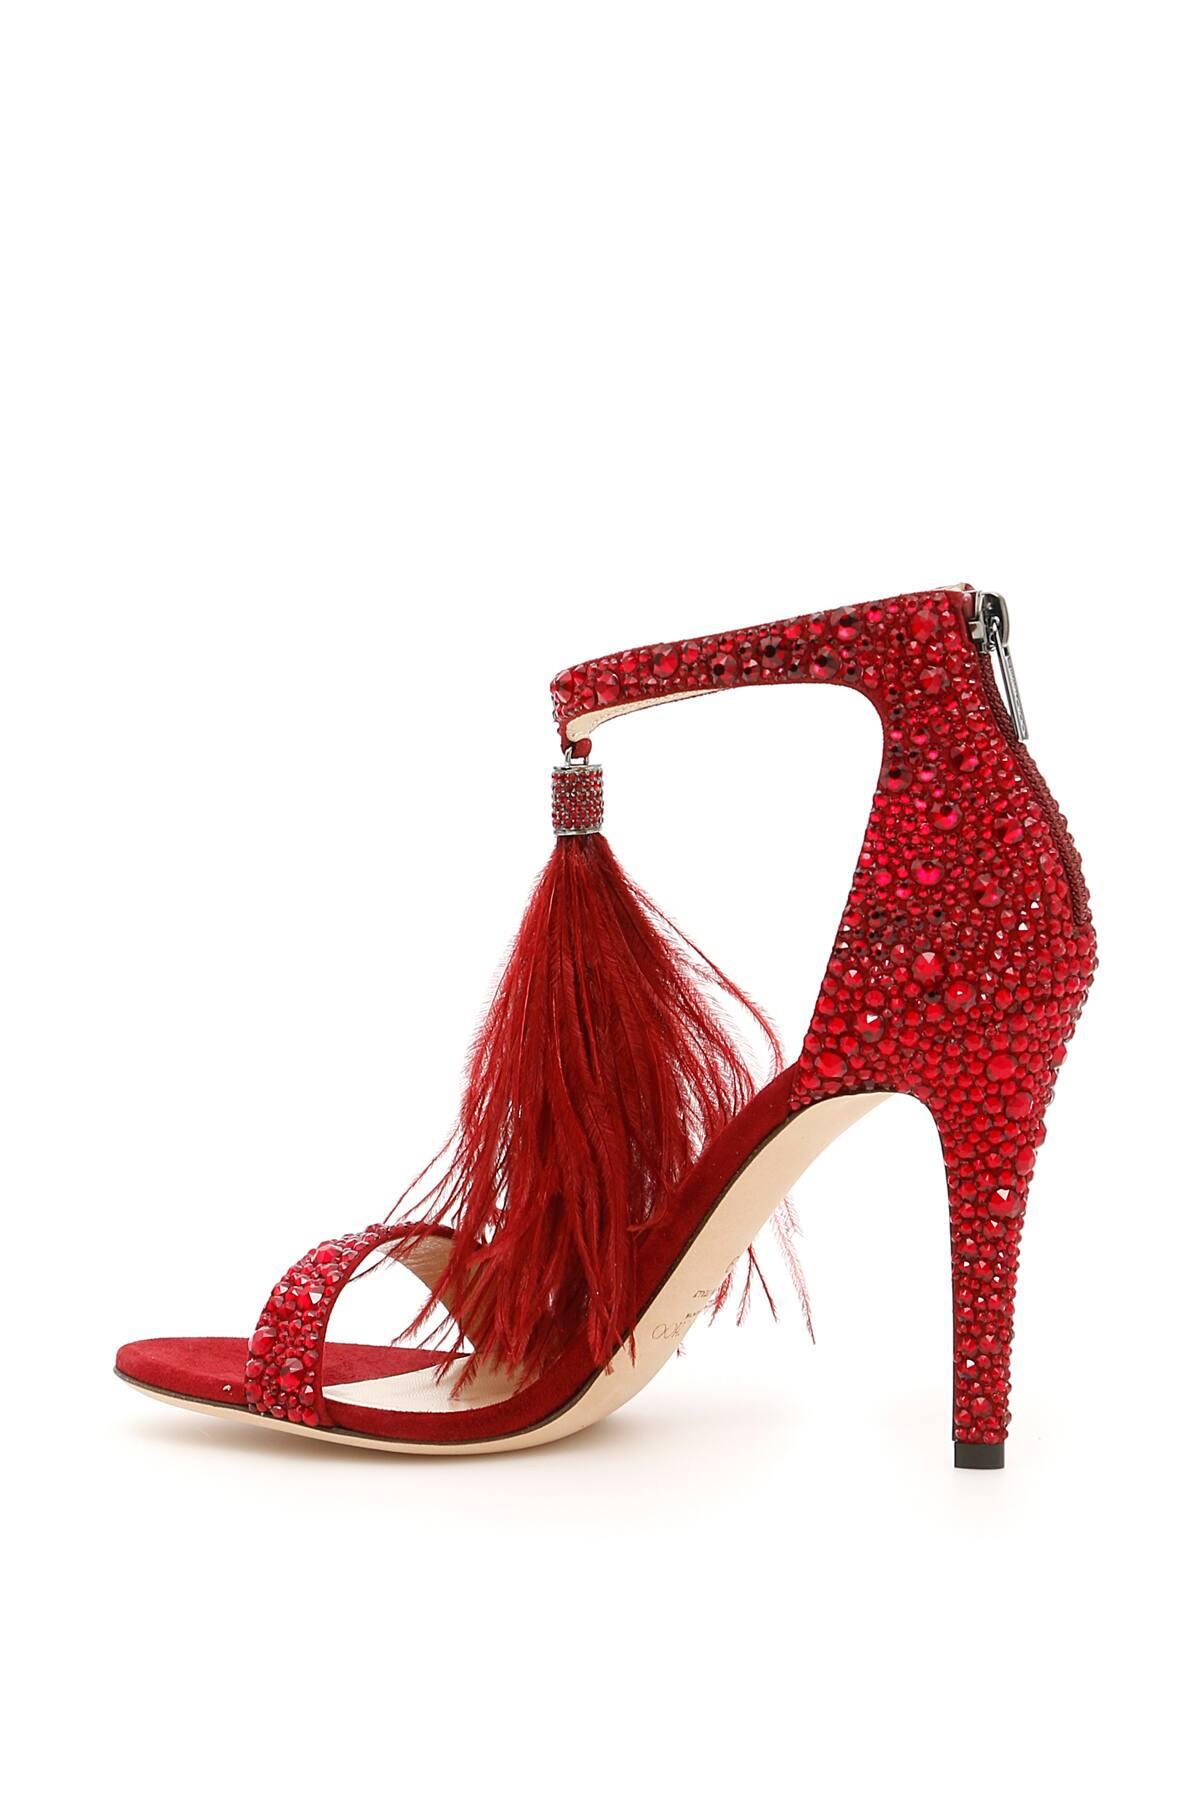 Jimmy Choo Viola 100 Sandals in Red | Lyst Australia